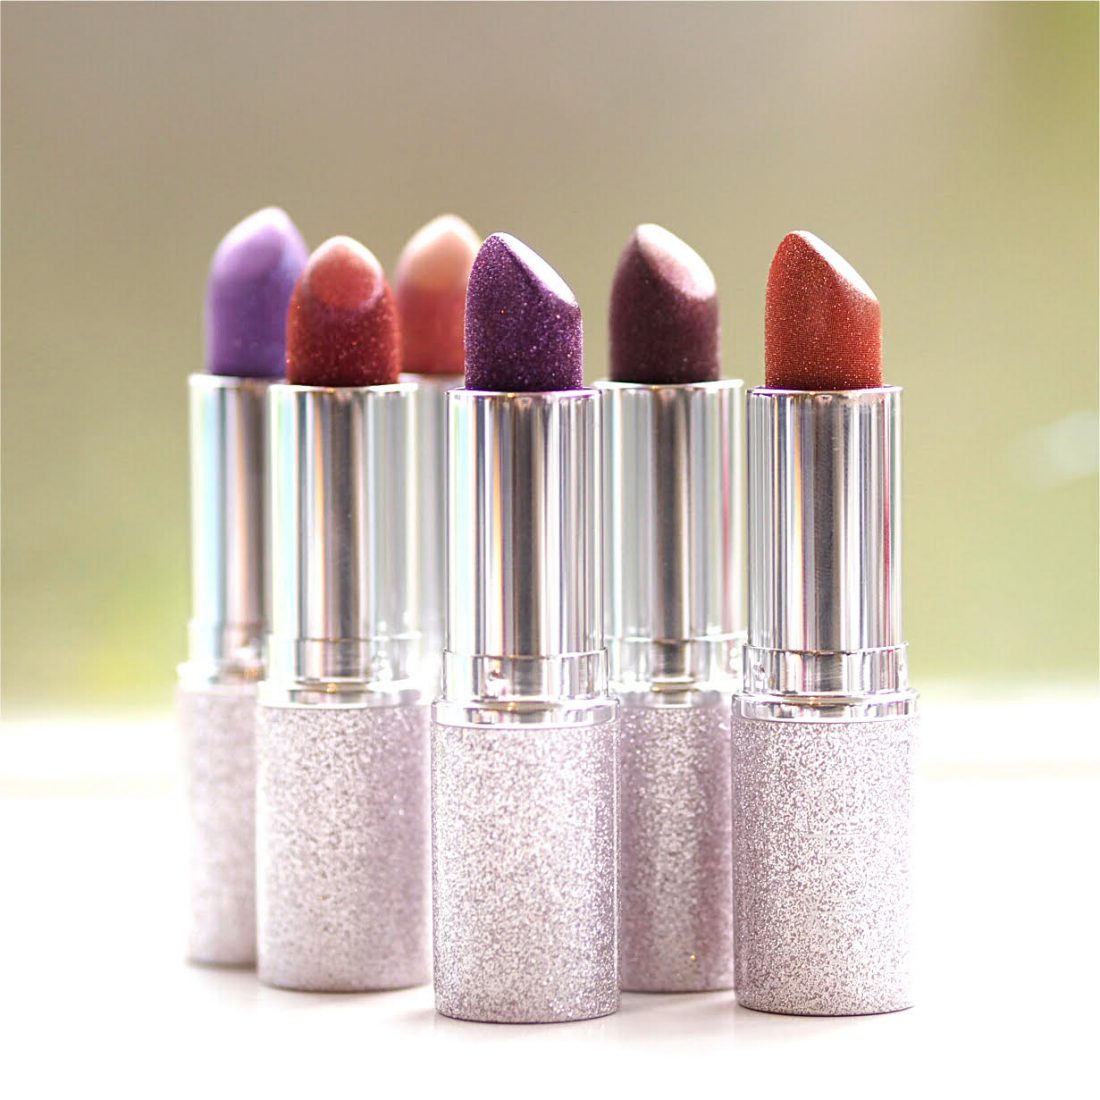 Ciate Glitter Storm Lipsticks | British Beauty Blogger – FashionNews